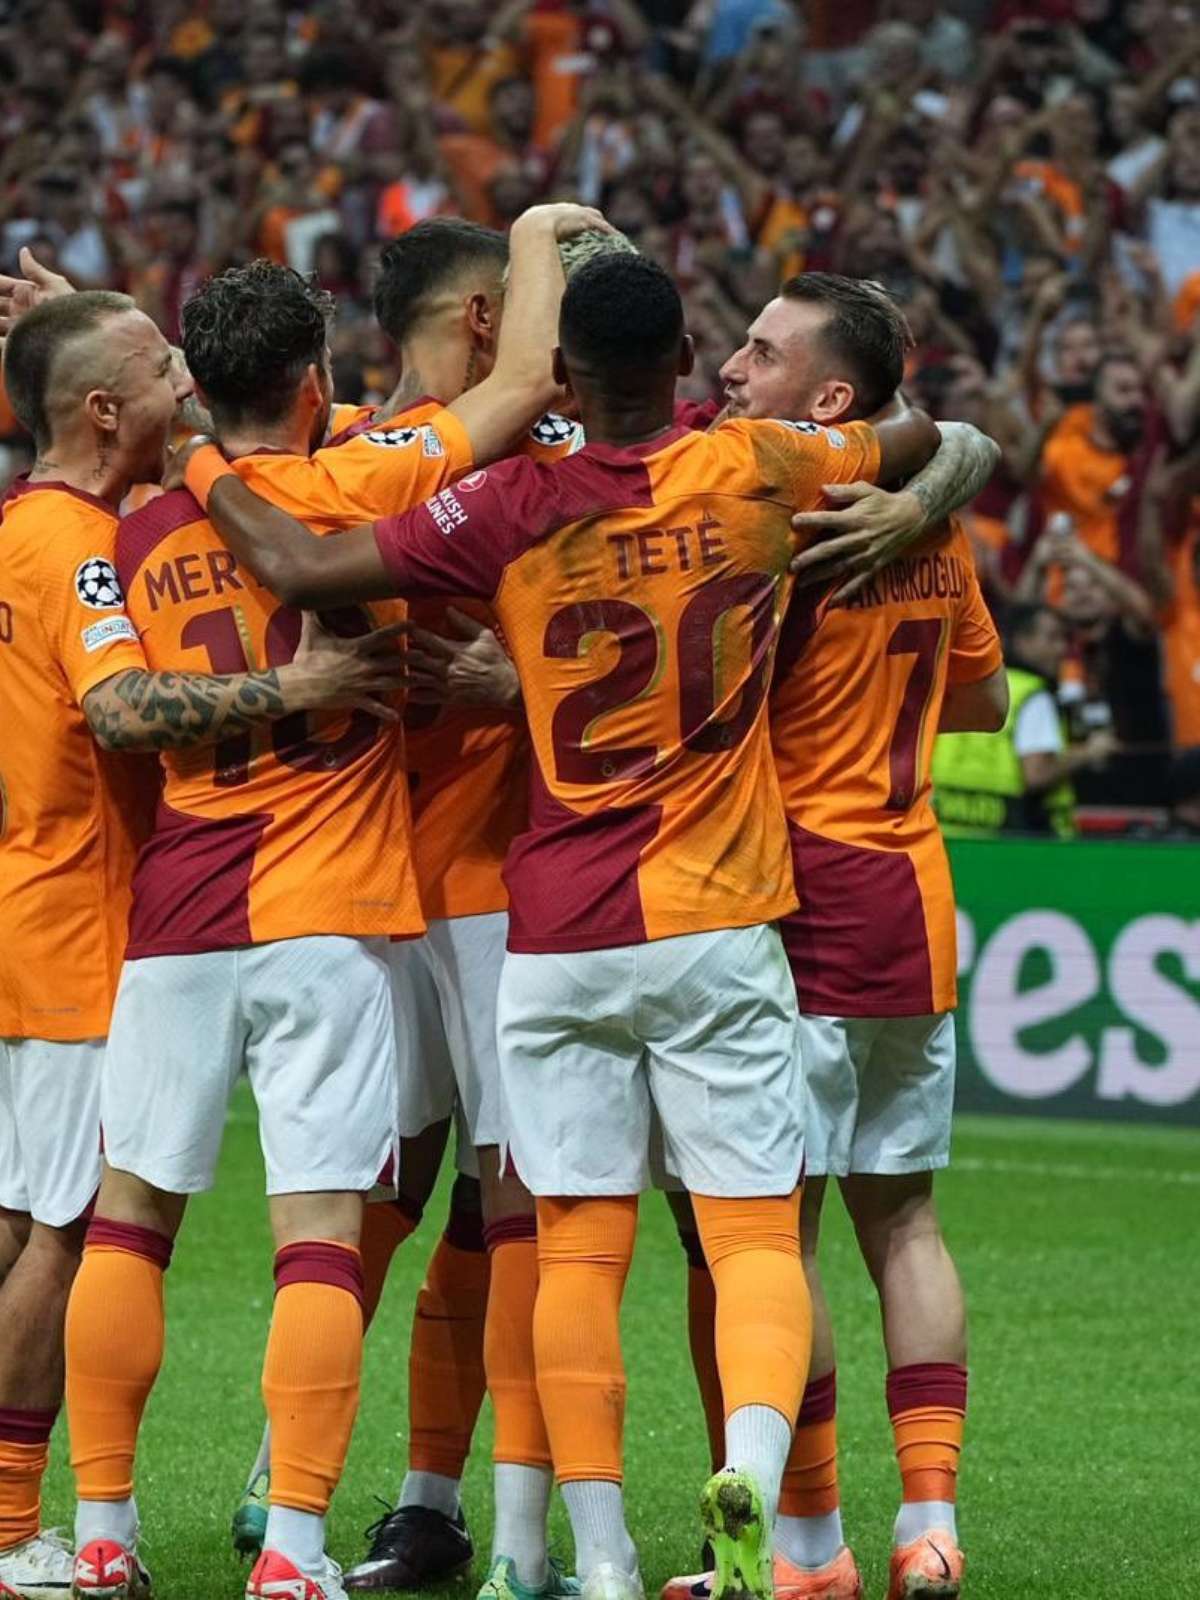 Galatasaray arranca empate e complica vida do United na Champions League